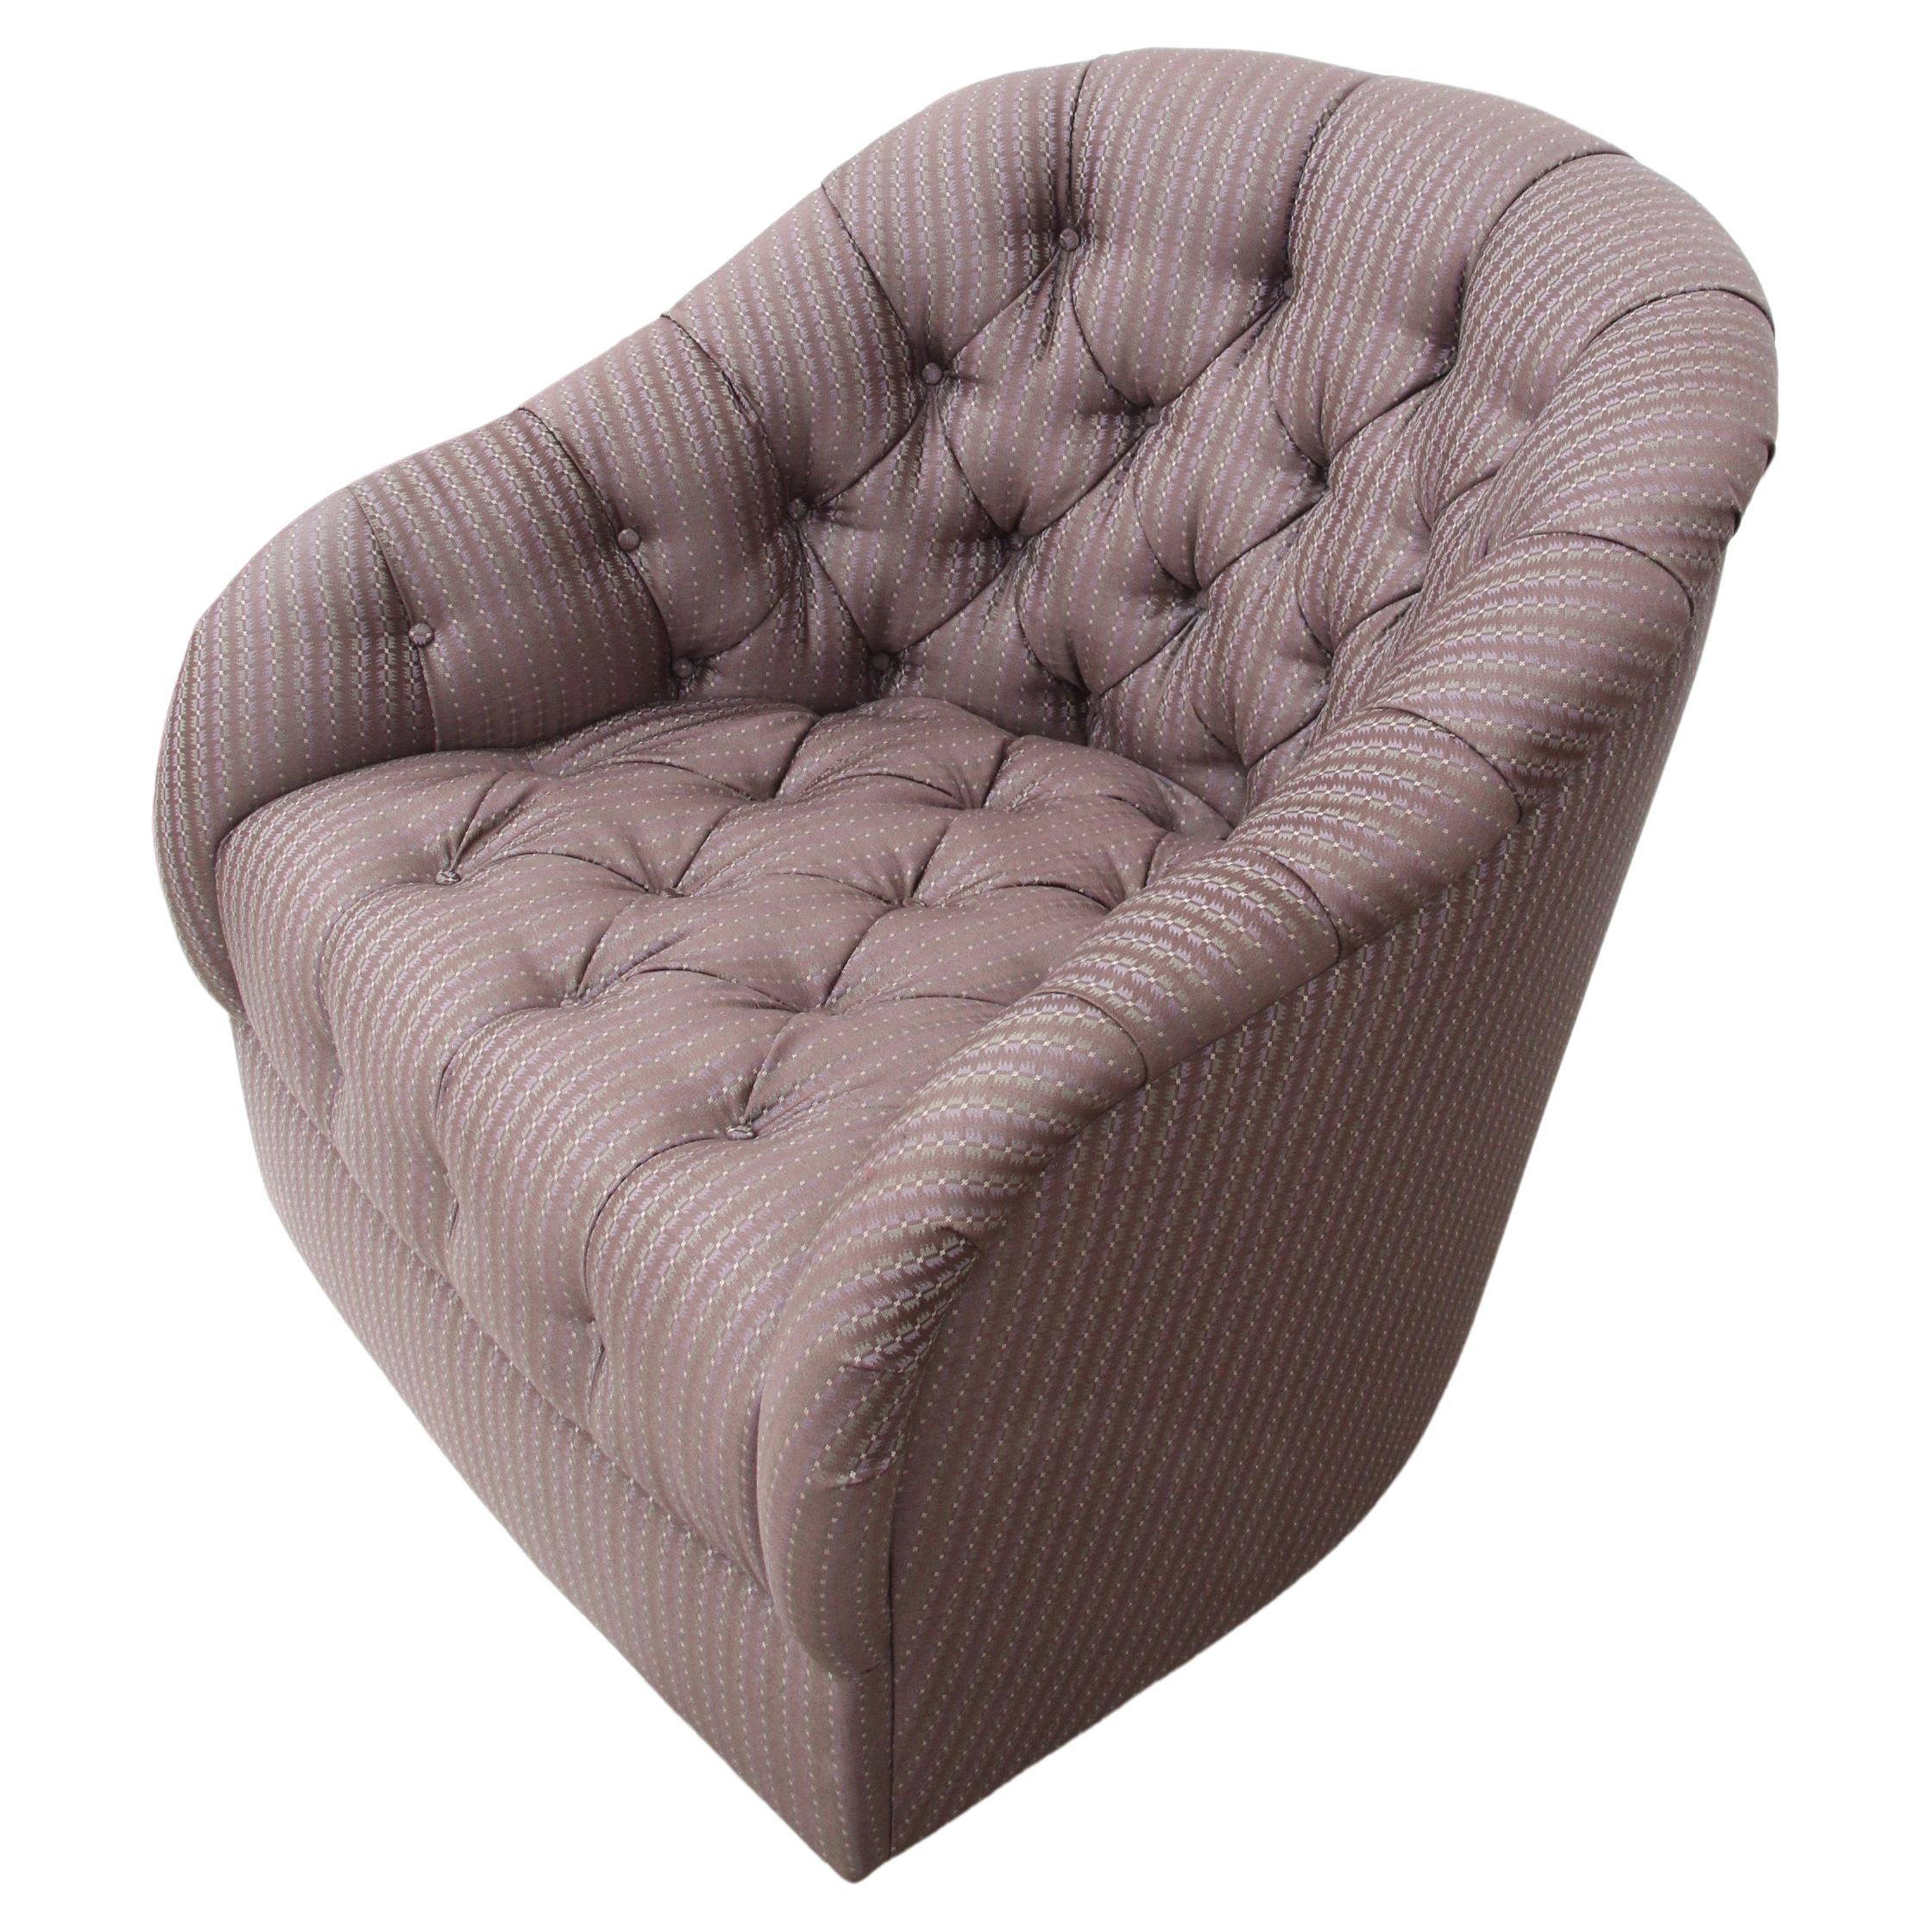 1 Ward Bennett Tufted Lounge Chair